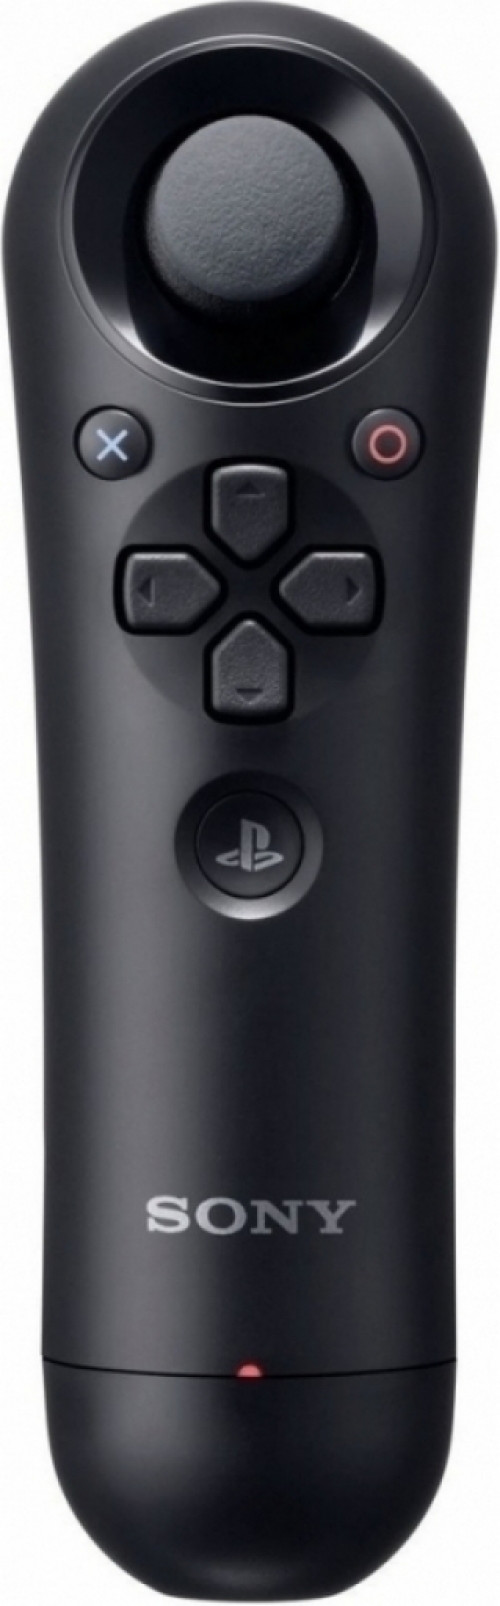 Sony Computer Entertainment PS3 Sub Controller (Move Navigation Controller)